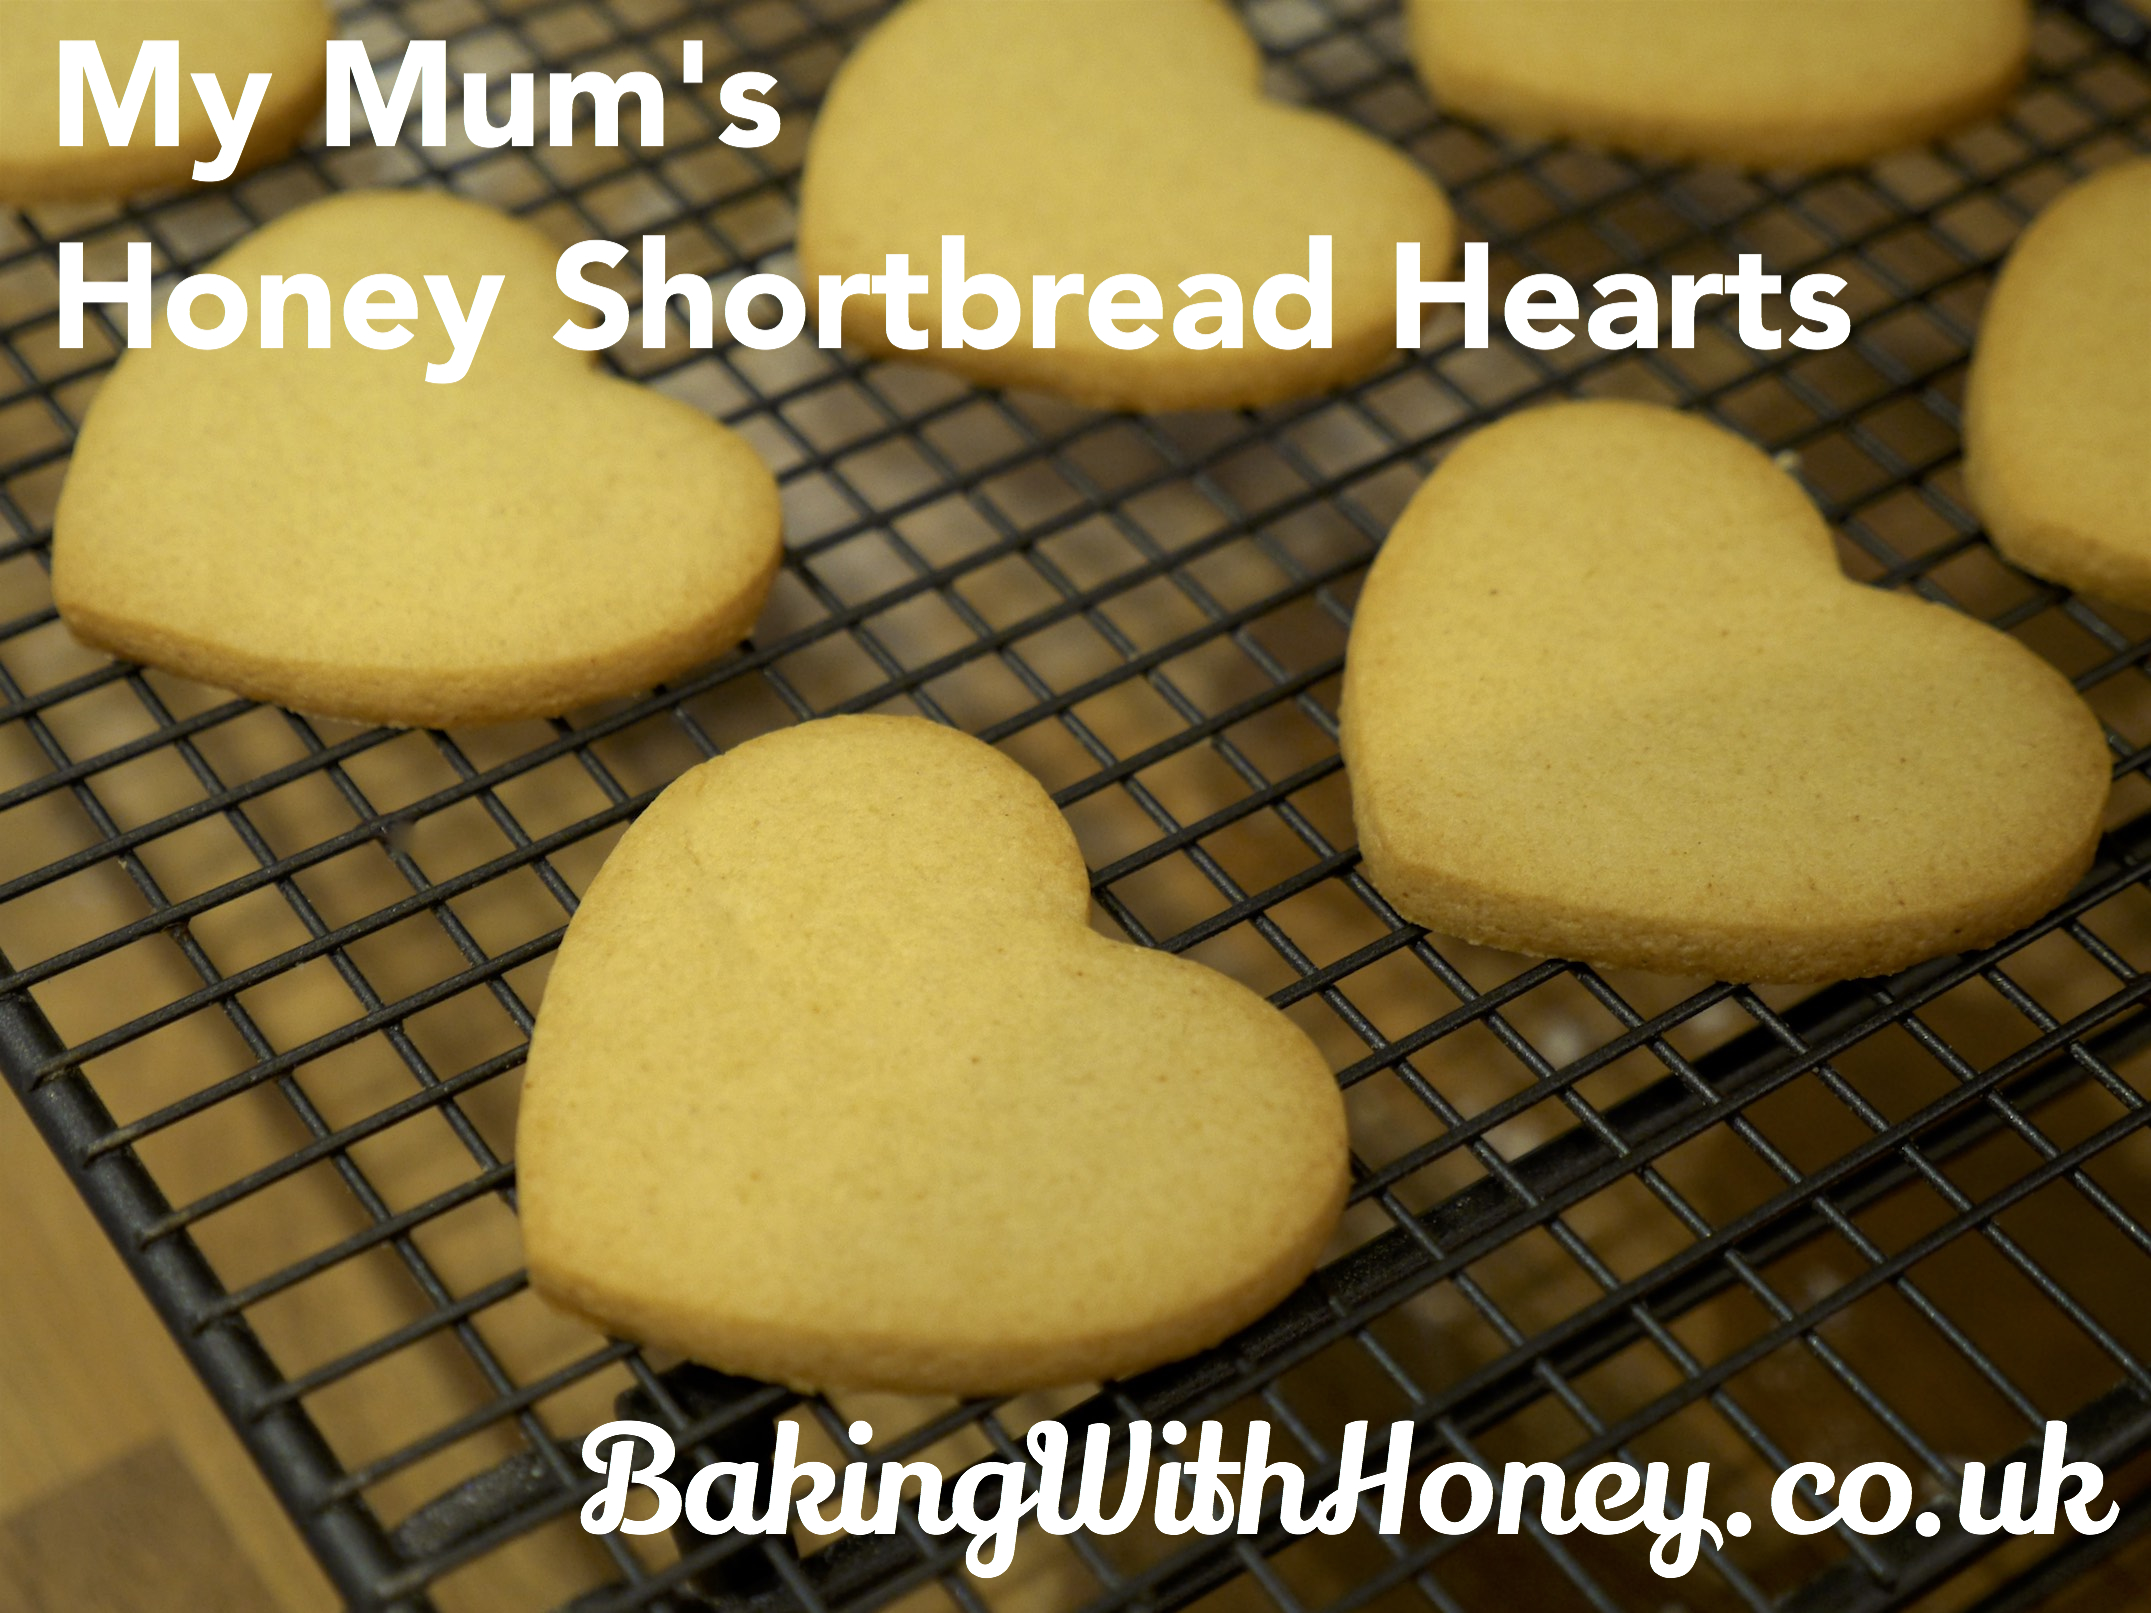 Shortbread Heart Baking Pan, Bakeware